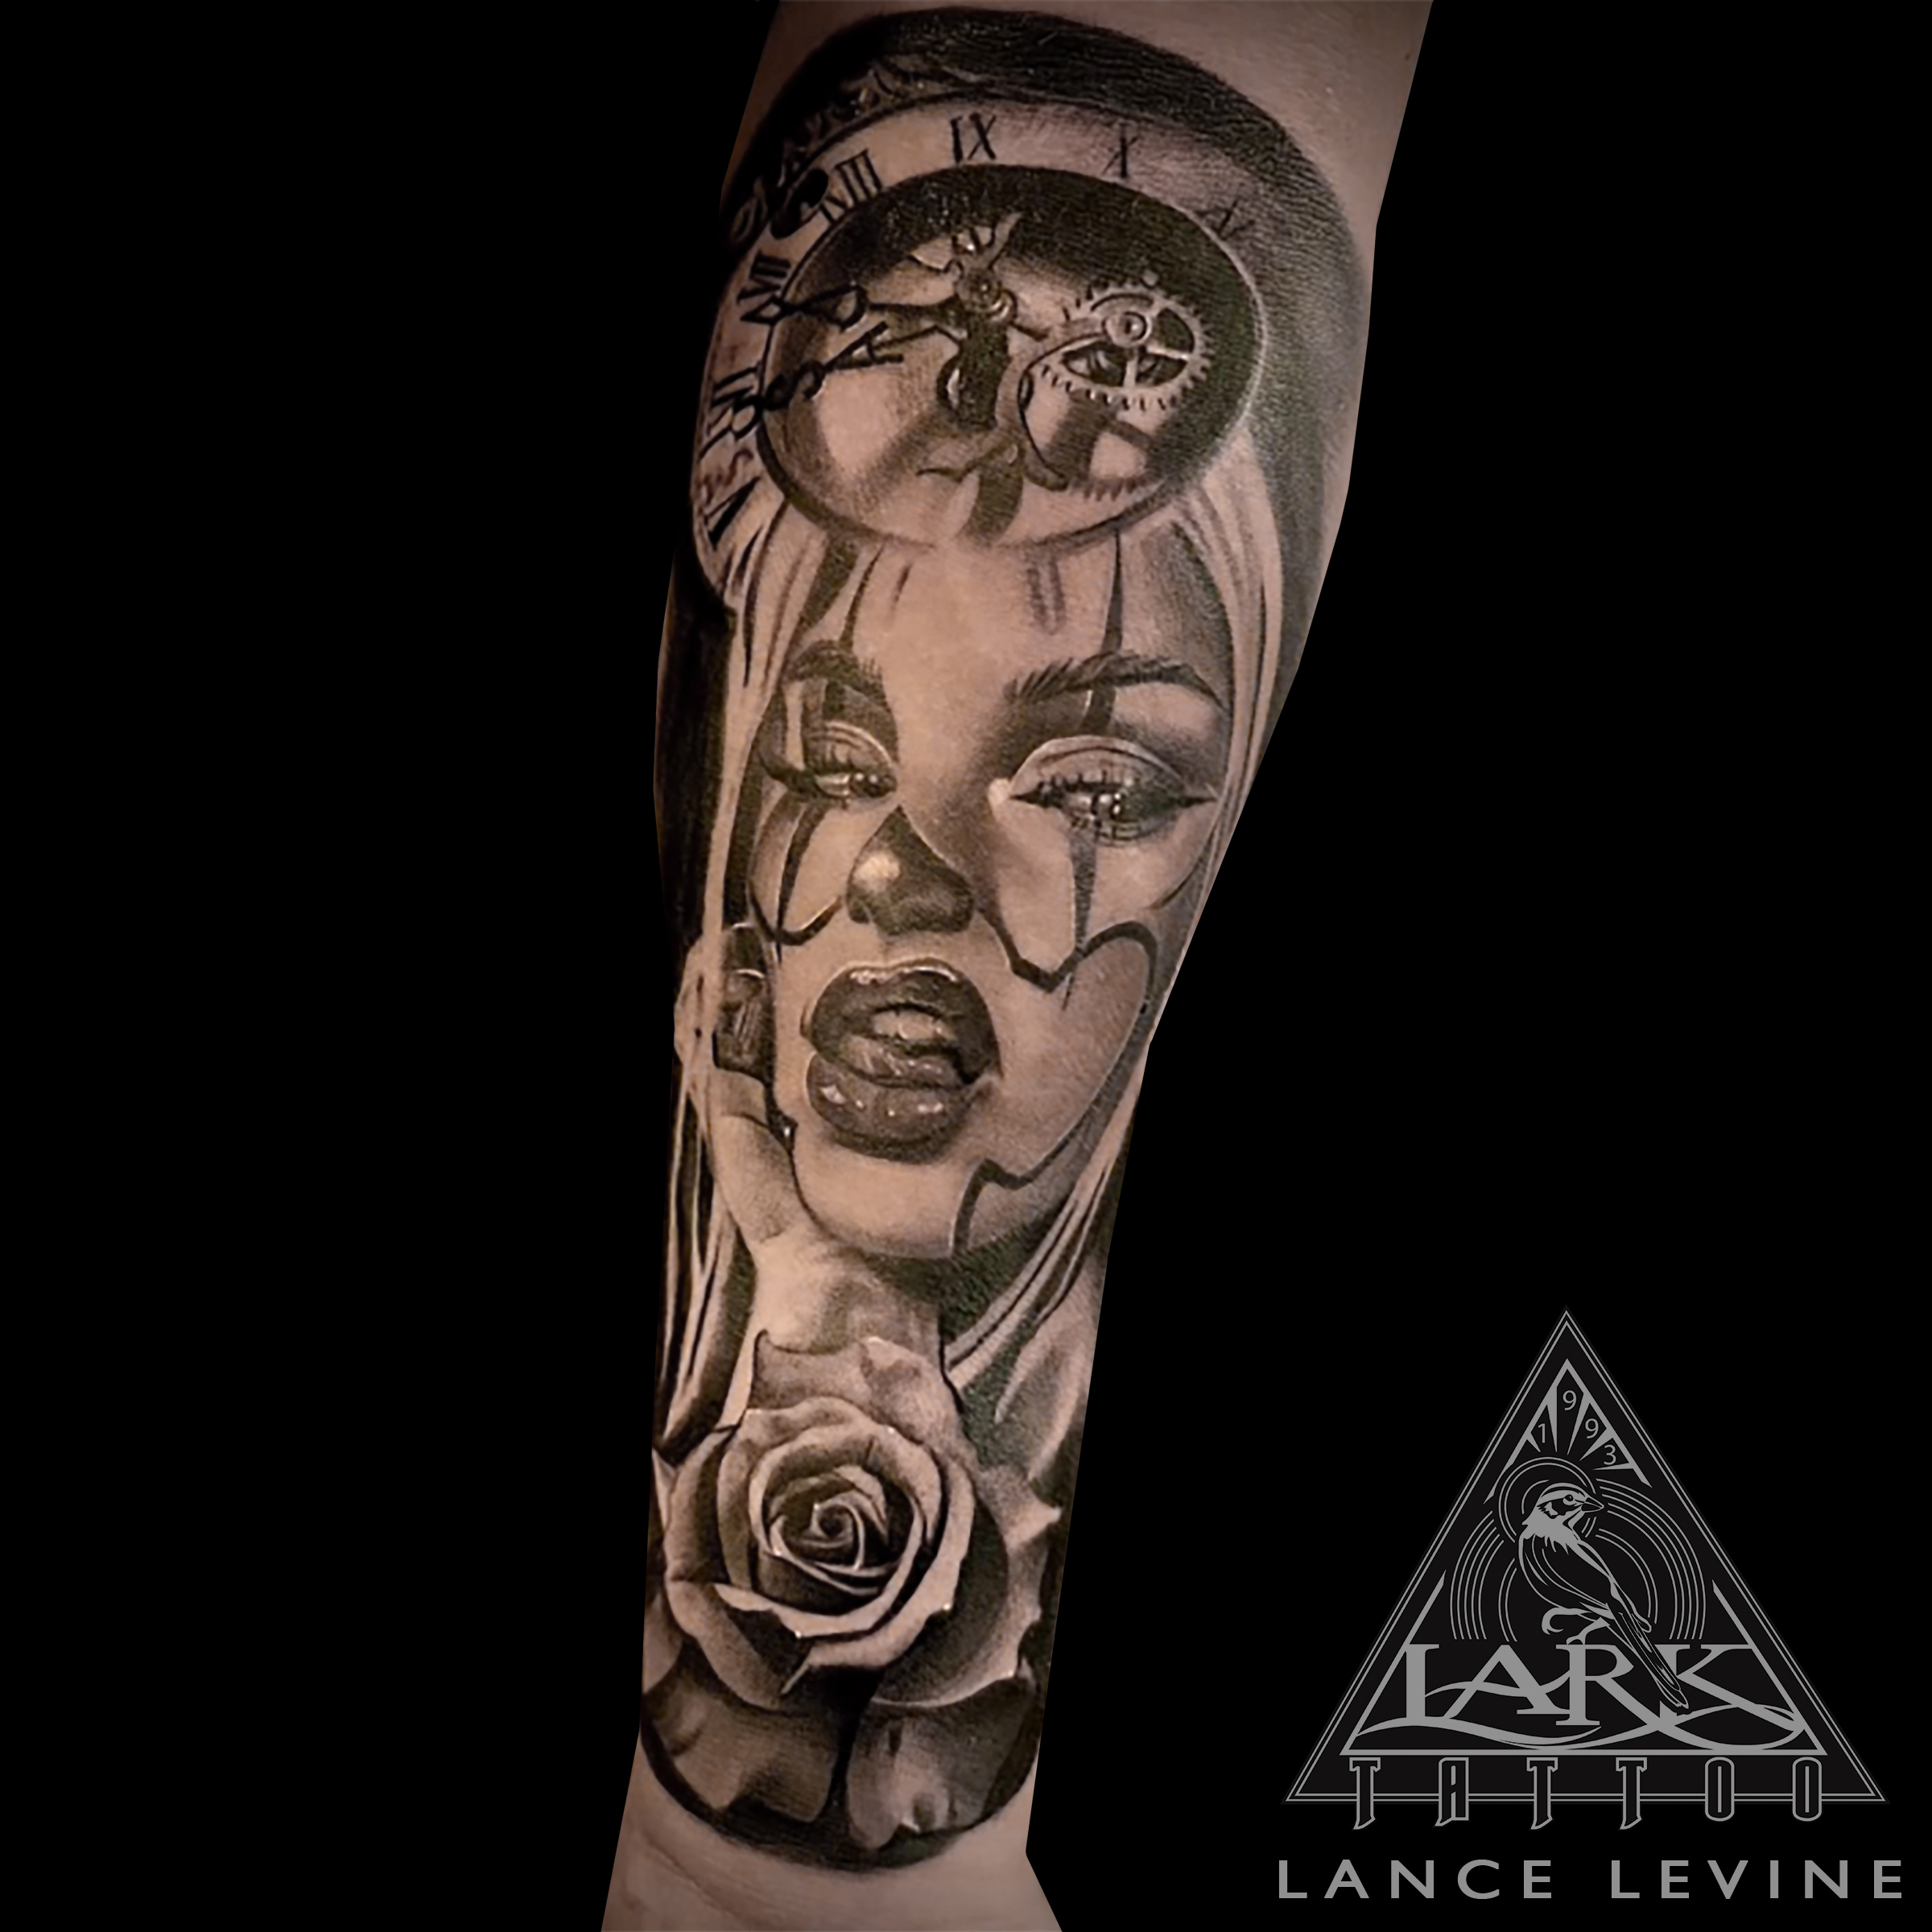 #LarkTattoo #Tattoo #Tattoos #LanceLevine #LanceLevineLarkTattoo #BNG #BNGTattoo #BlackAndGray #BlackAndGrayTattoo #BlackAndGrey #BlackAndGreyTattoo #PortraitTattoo #Realism #RealismTattoo #Realistic #RealisticTattoo #Clock #ClockTattoo #Rose #RoseTattoo #Flower #FlowerTattoo #TattooArtist #Tattoist #Tattooer #LongIslandTattooArtist #LongIslandTattooer #LongIslandTattoo #TattooOfTheDay #Tat #Tats #Tatts #Tatted #Inked #Ink #TattooInk #AmazingInk #AmazingTattoo #BodyArt #LarkTattooWestbury #Westbury #LongIsland #NY #NewYork #USA #Art #Tattedup #InkedUp #LarkTattoos